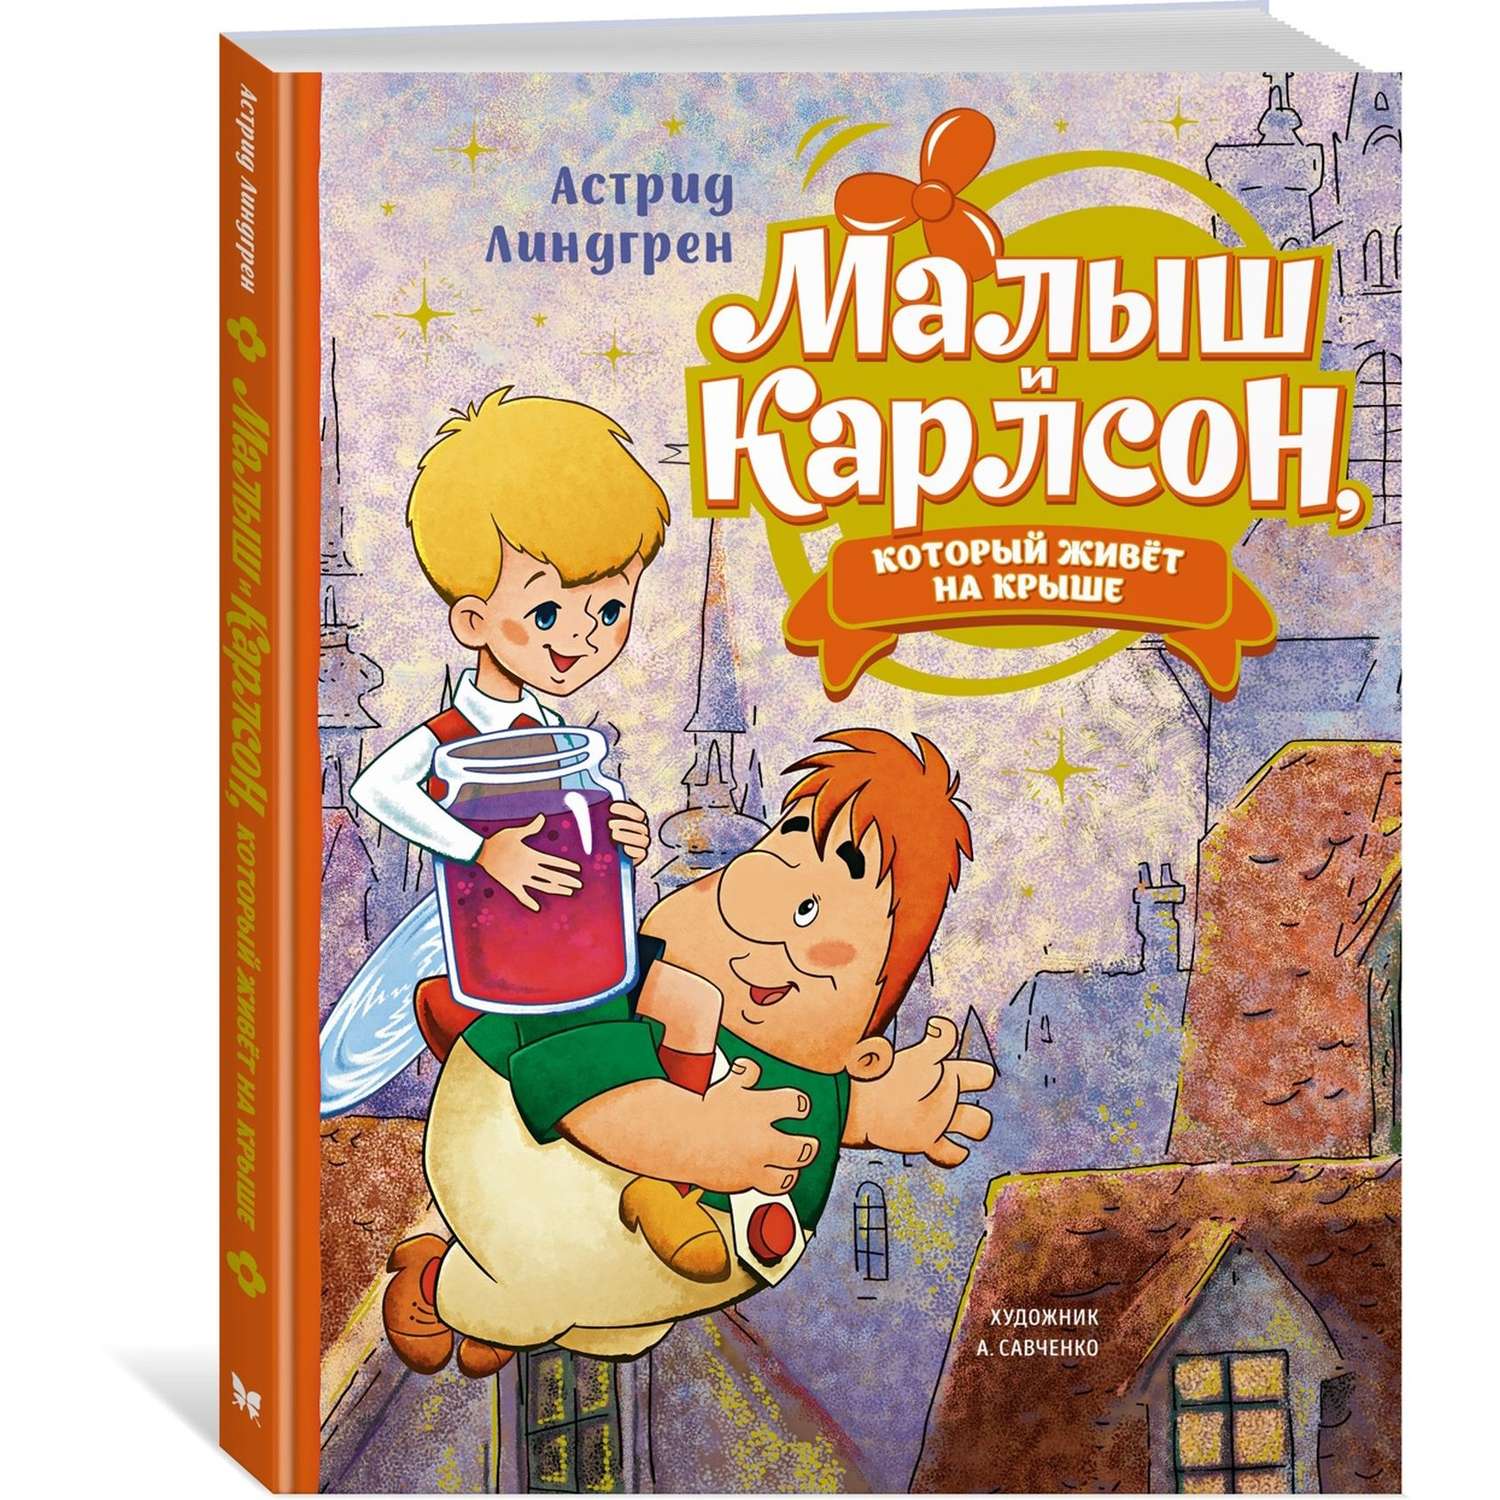 Книга Малыш и Карлсон который живёт на крыше Линдгрен иллюстрации Савченко - фото 2